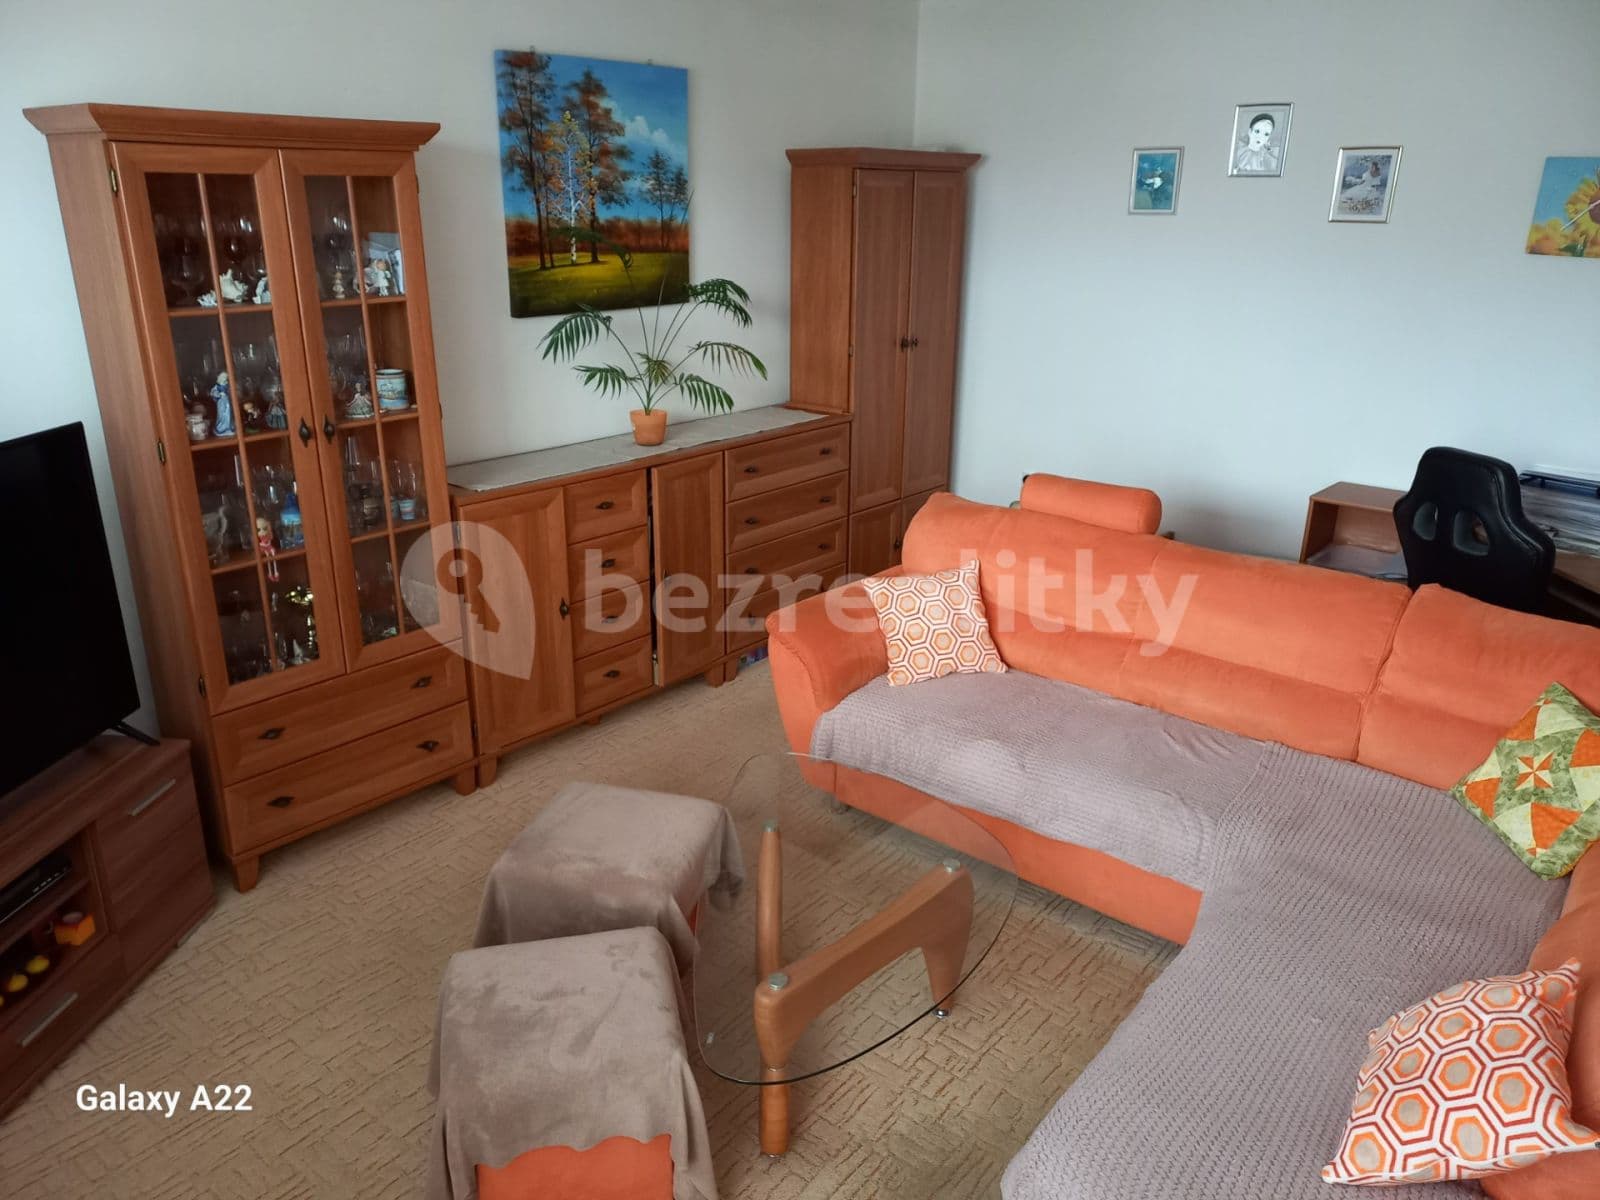 4 bedroom flat for sale, 88 m², Rokytno, Pardubický Region